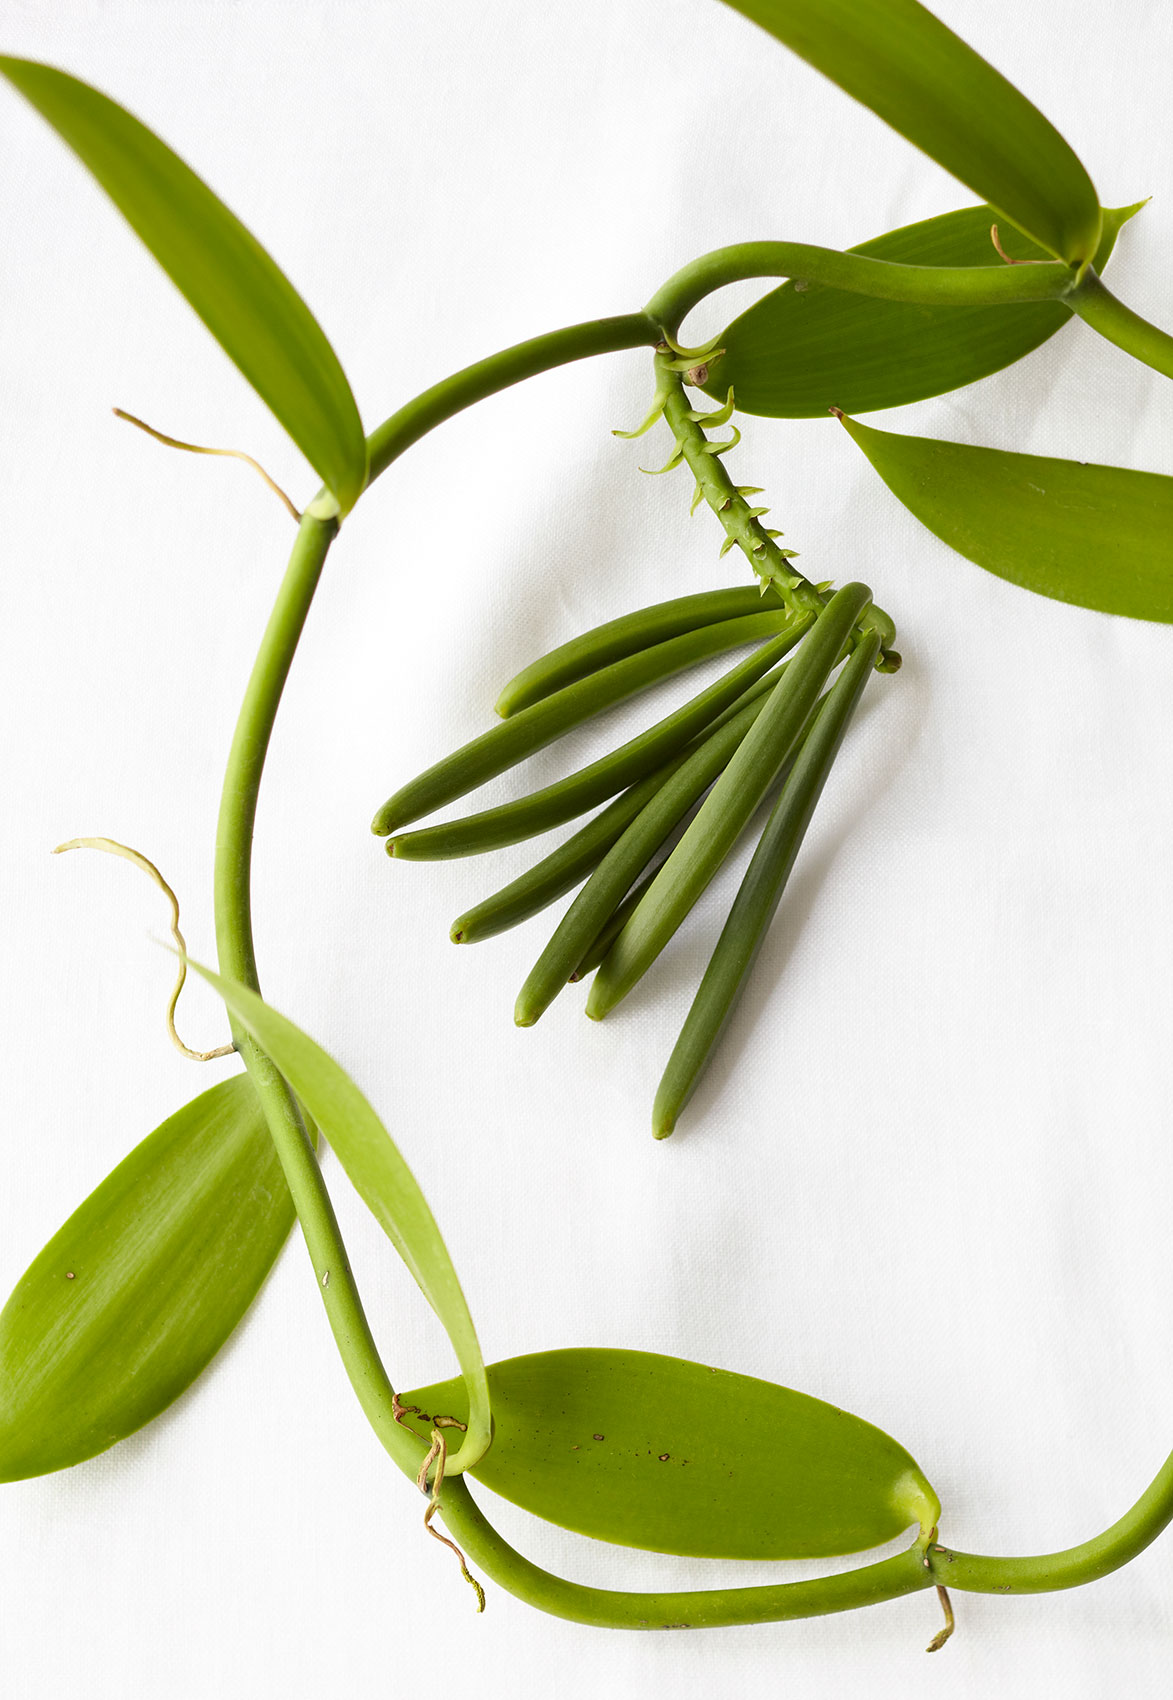 Vanilla Table • Lush Green Vanilla Beans & Vine on White Counter • Cookbook & Editorial Food Photography